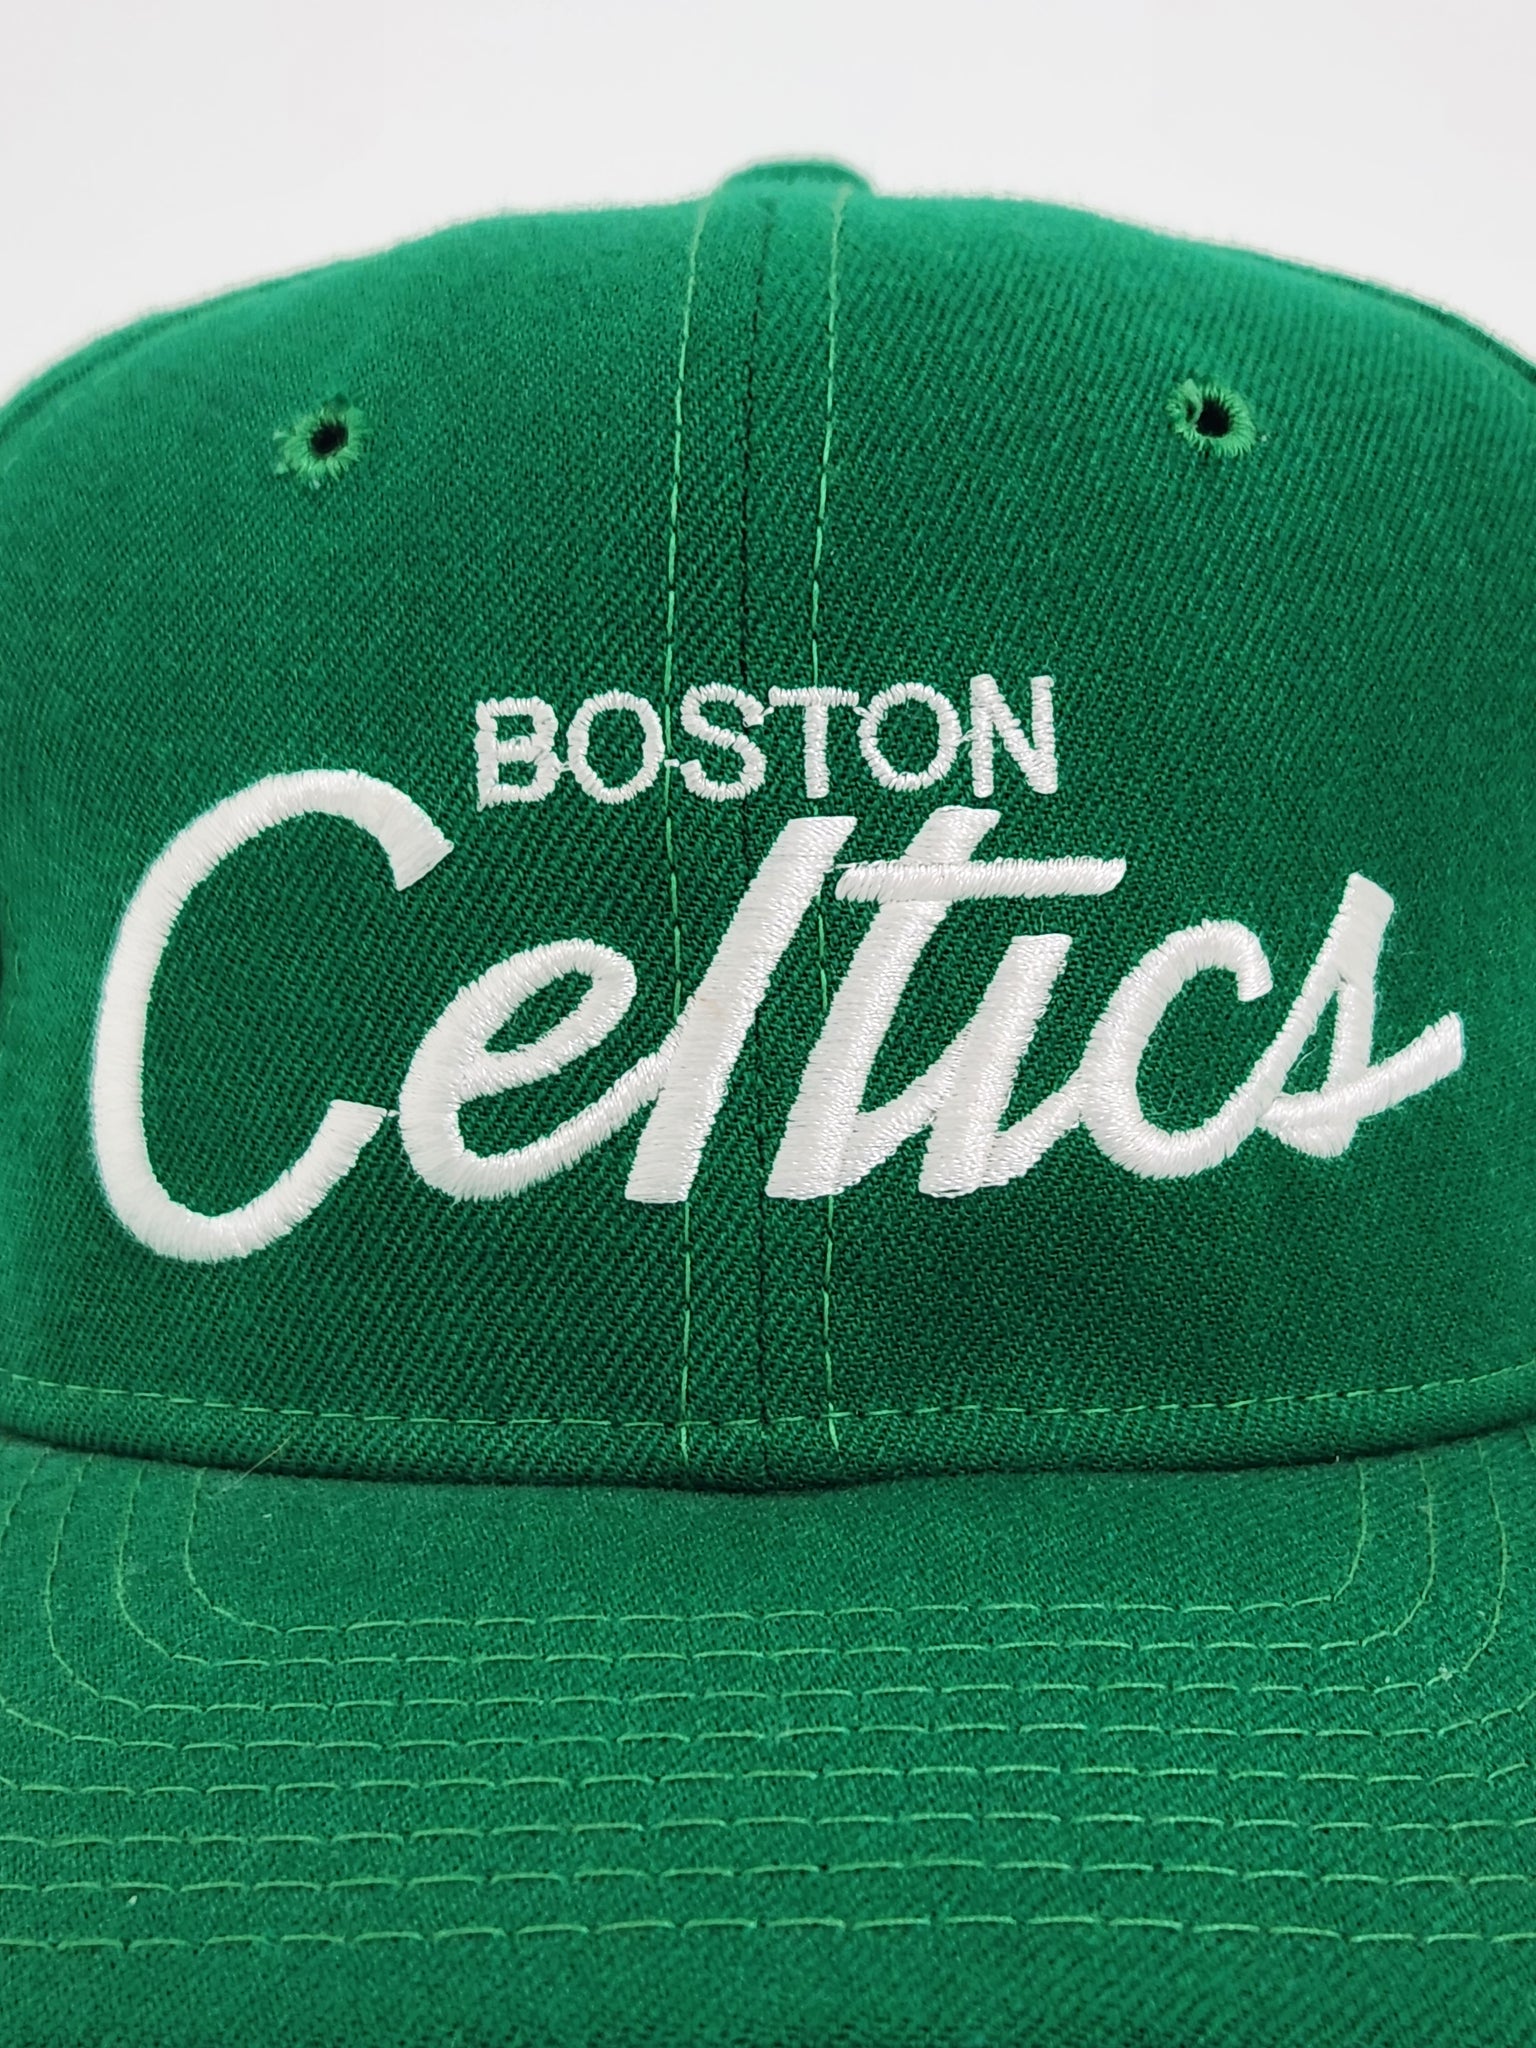 Vintage Celtics Basketball Script (Green) - Boston Celtics - T-Shirt